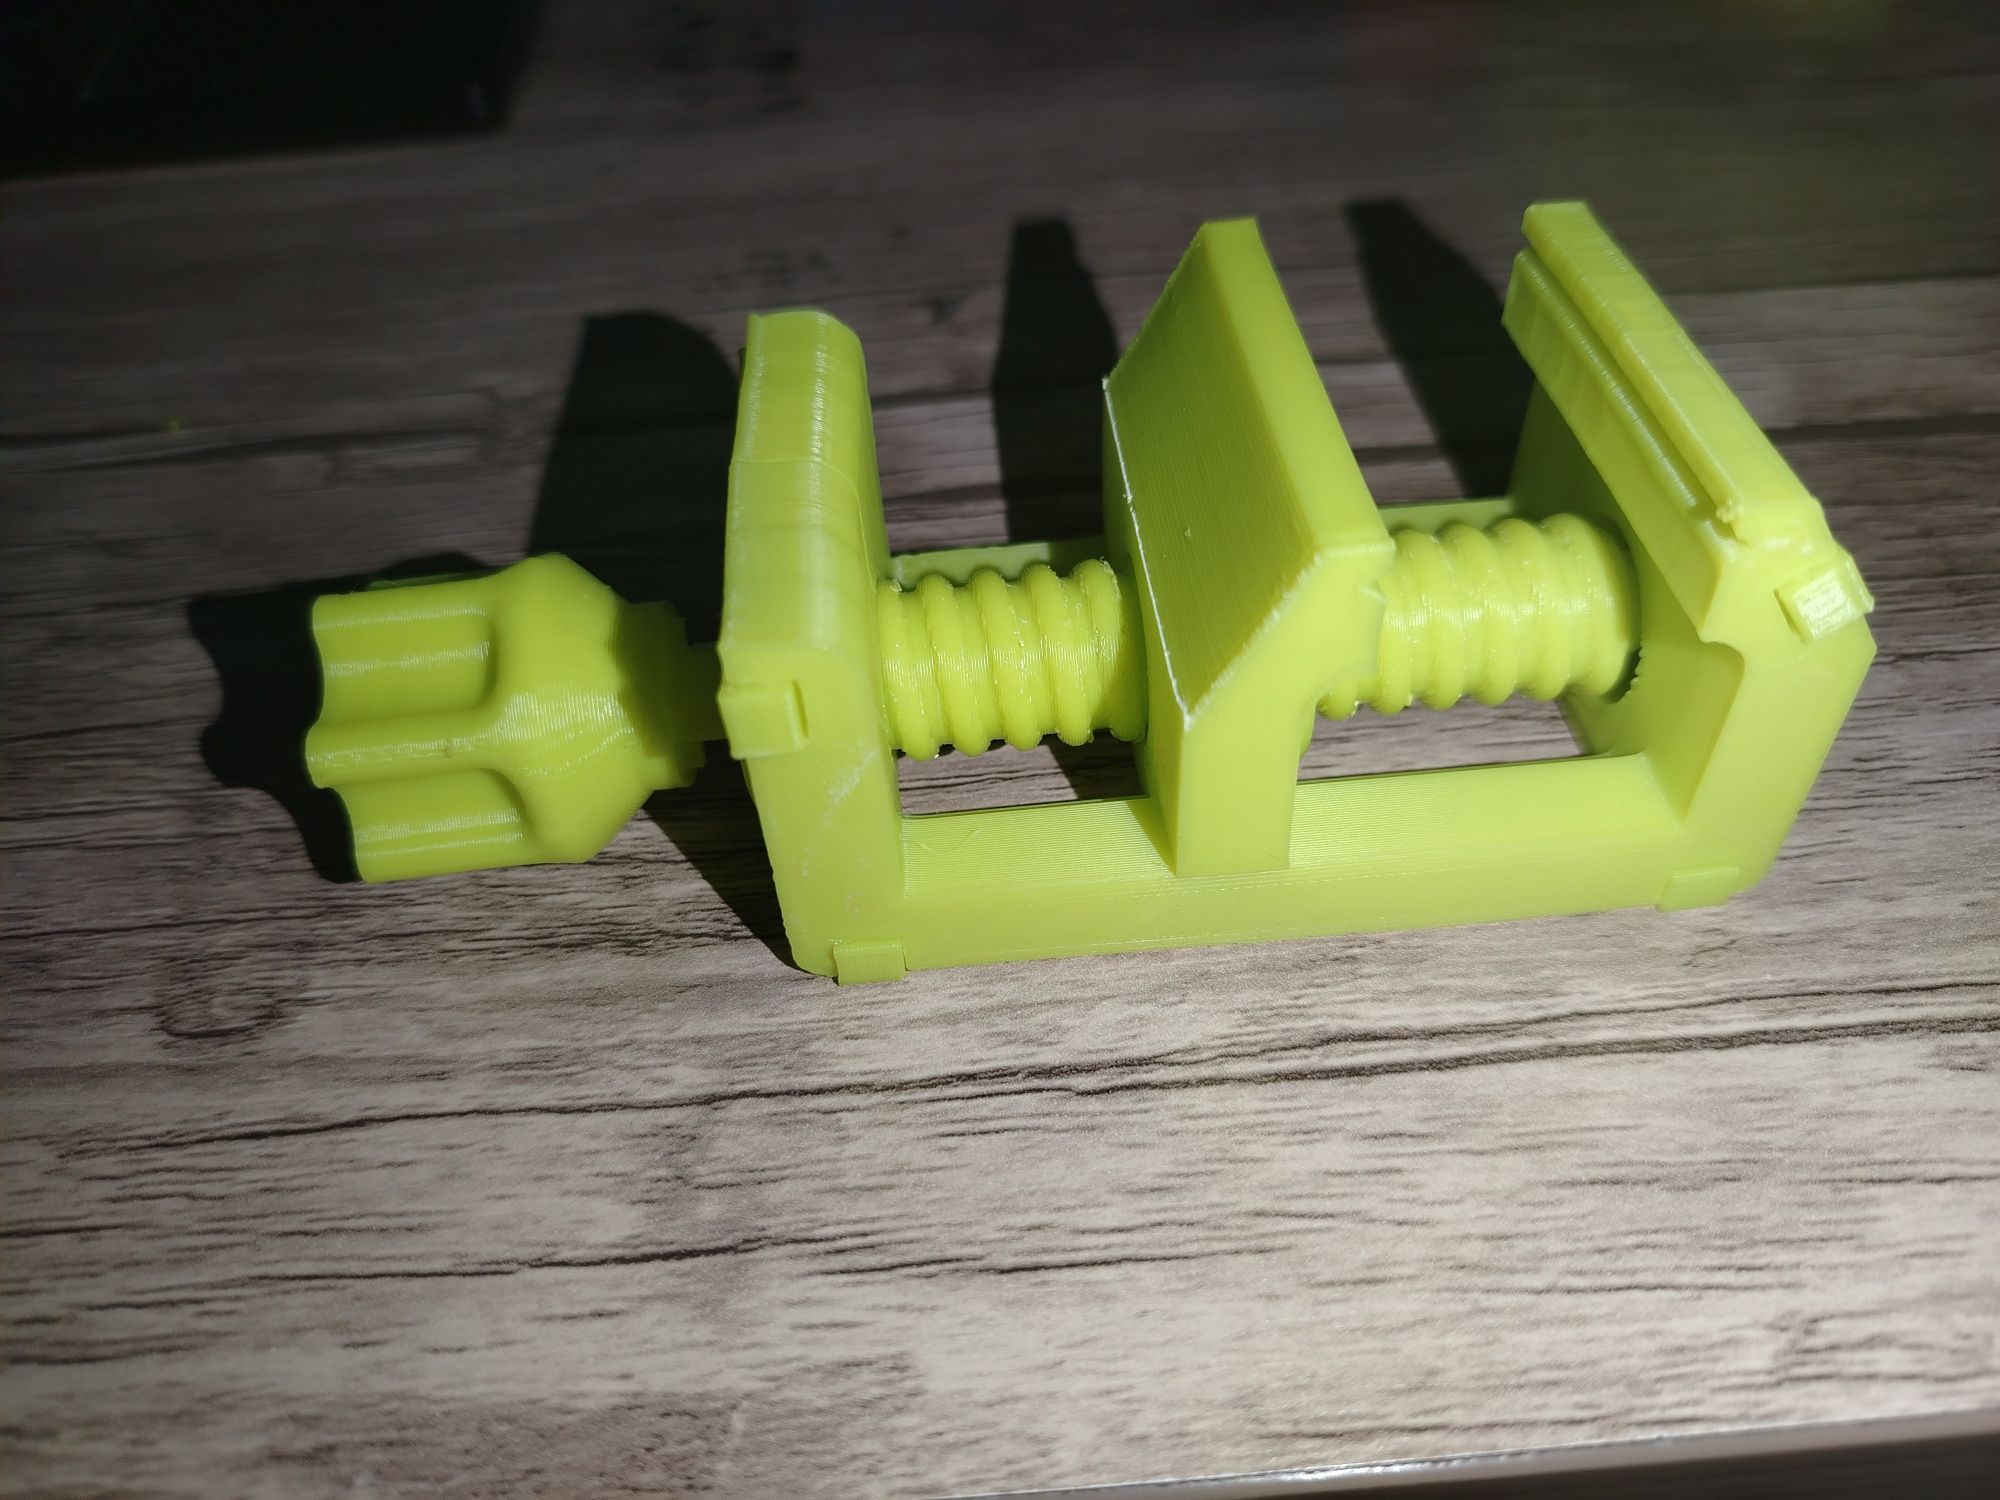 3D printer xizmati arzon va sifatli